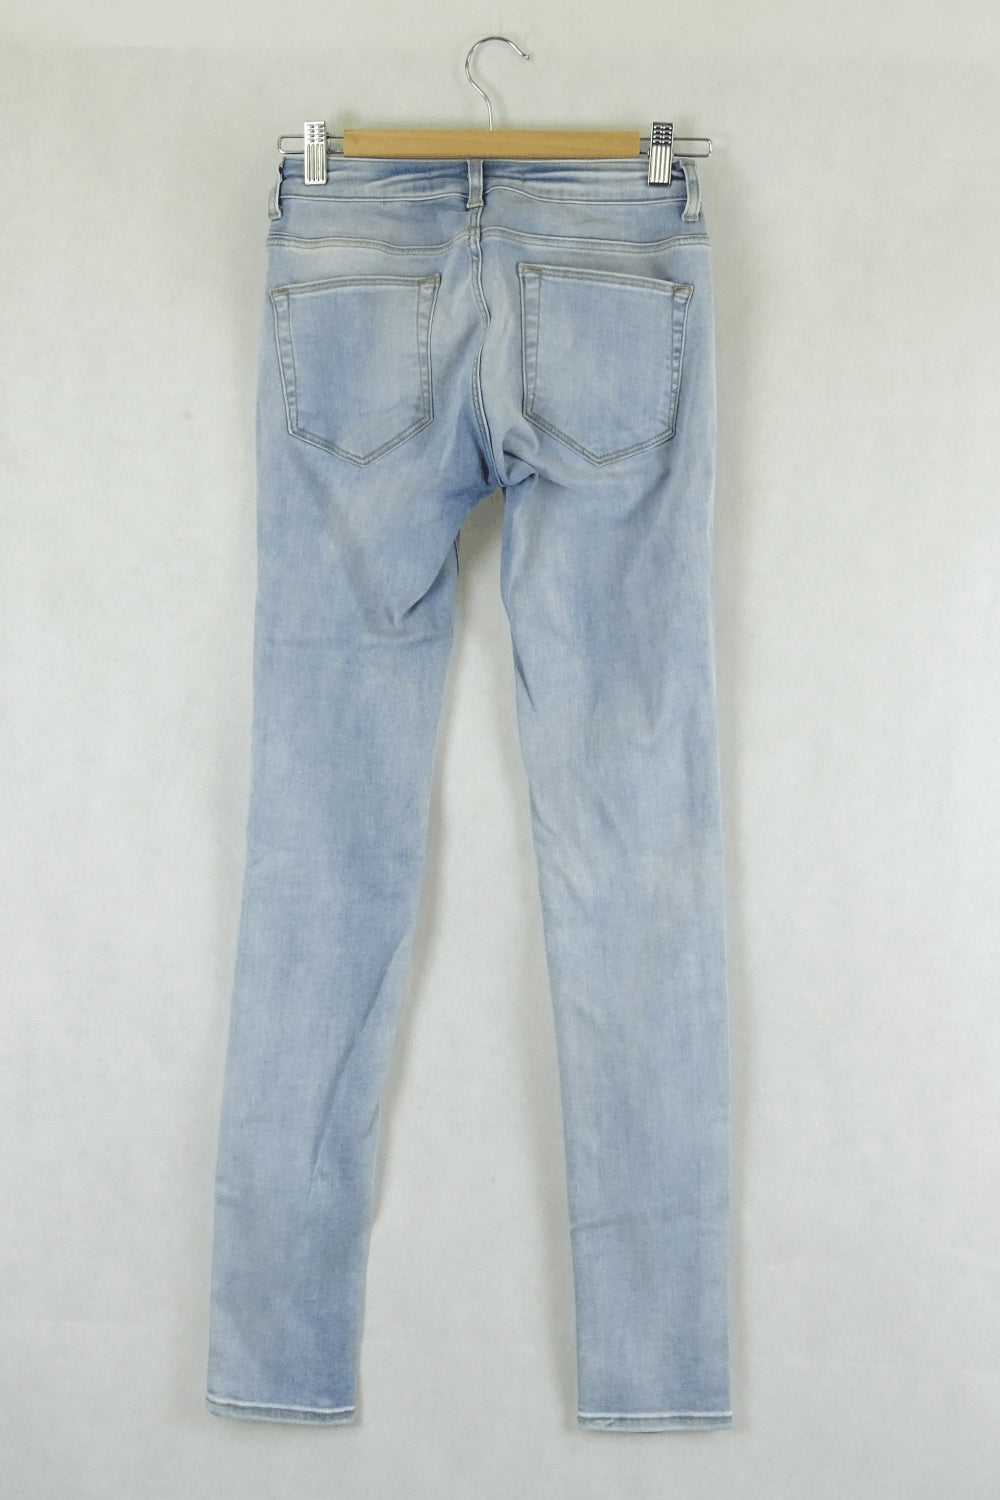 Saba Blue Skinny Mid Rise Jeans 26 (Au 8)